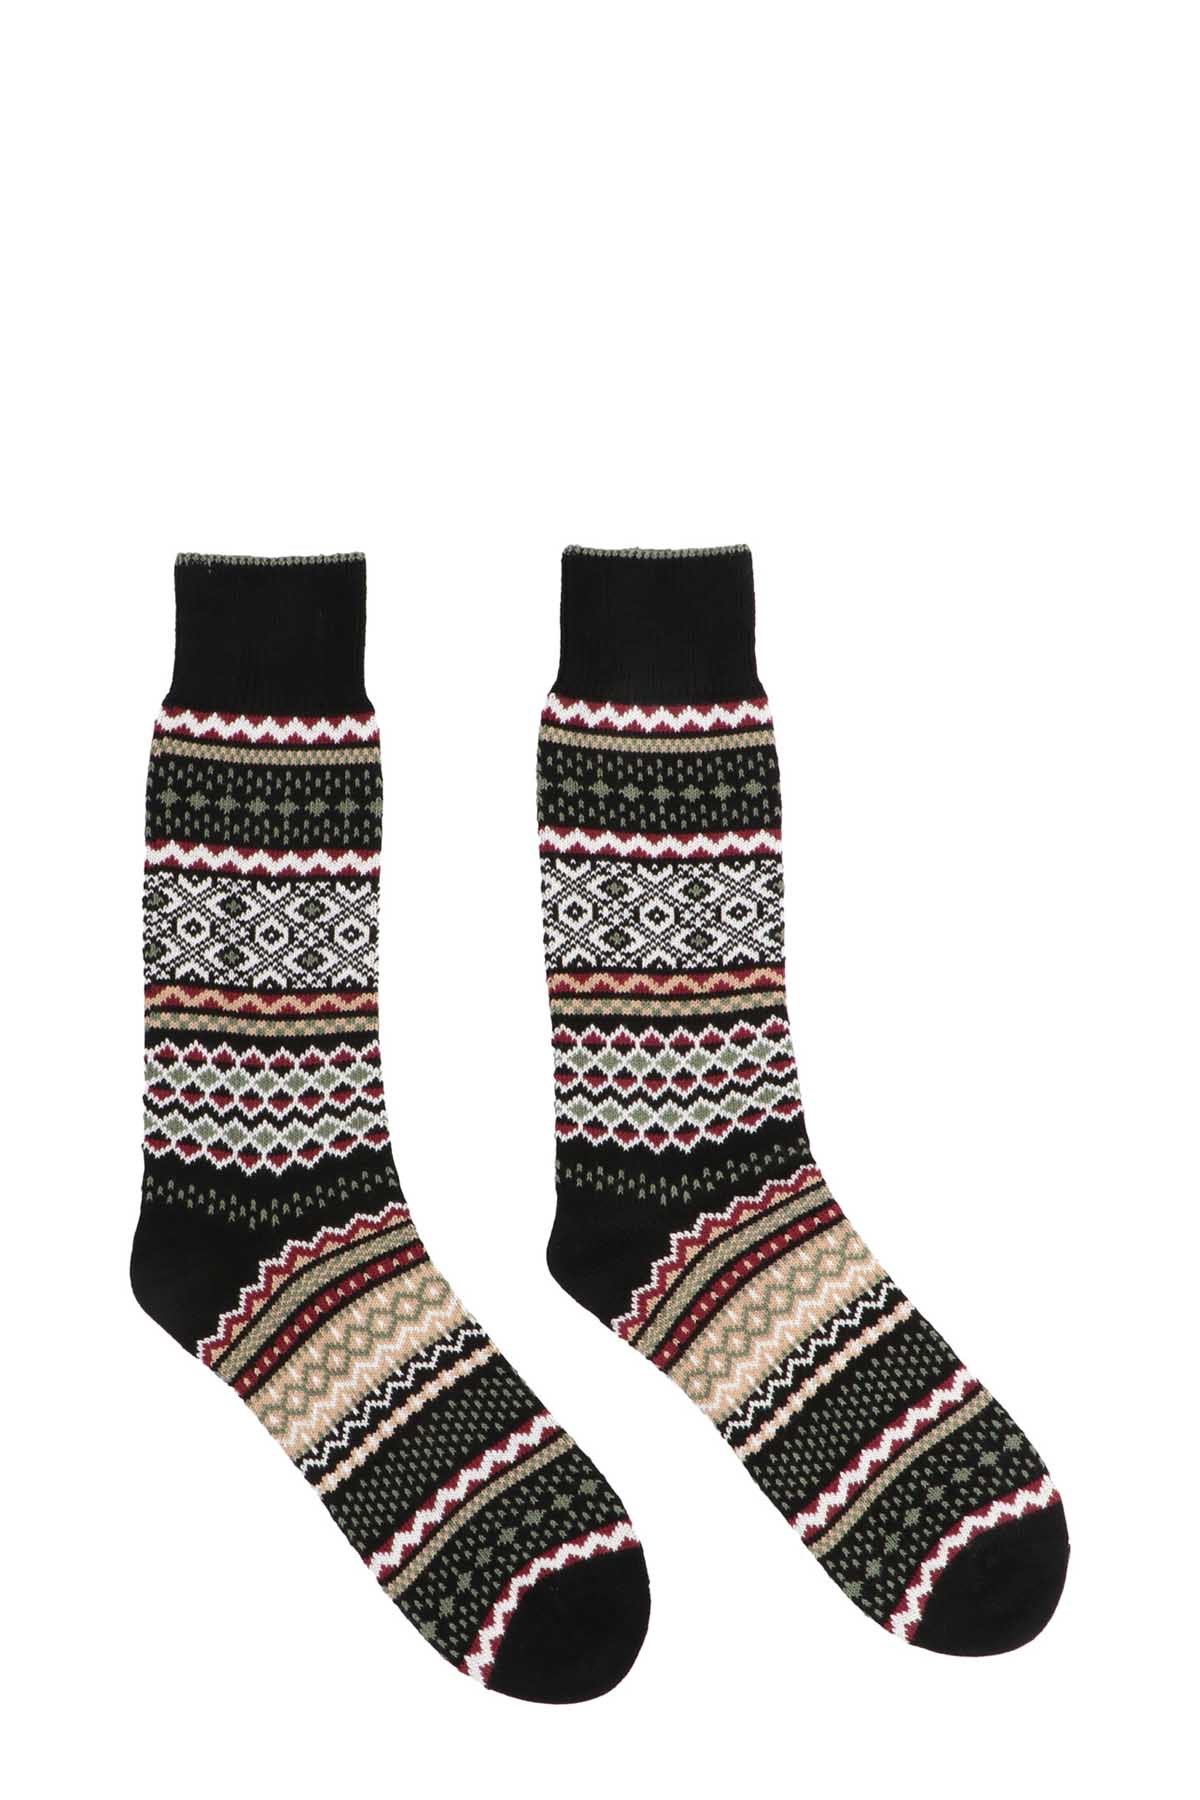 ANT45	 'Corvara' Socks